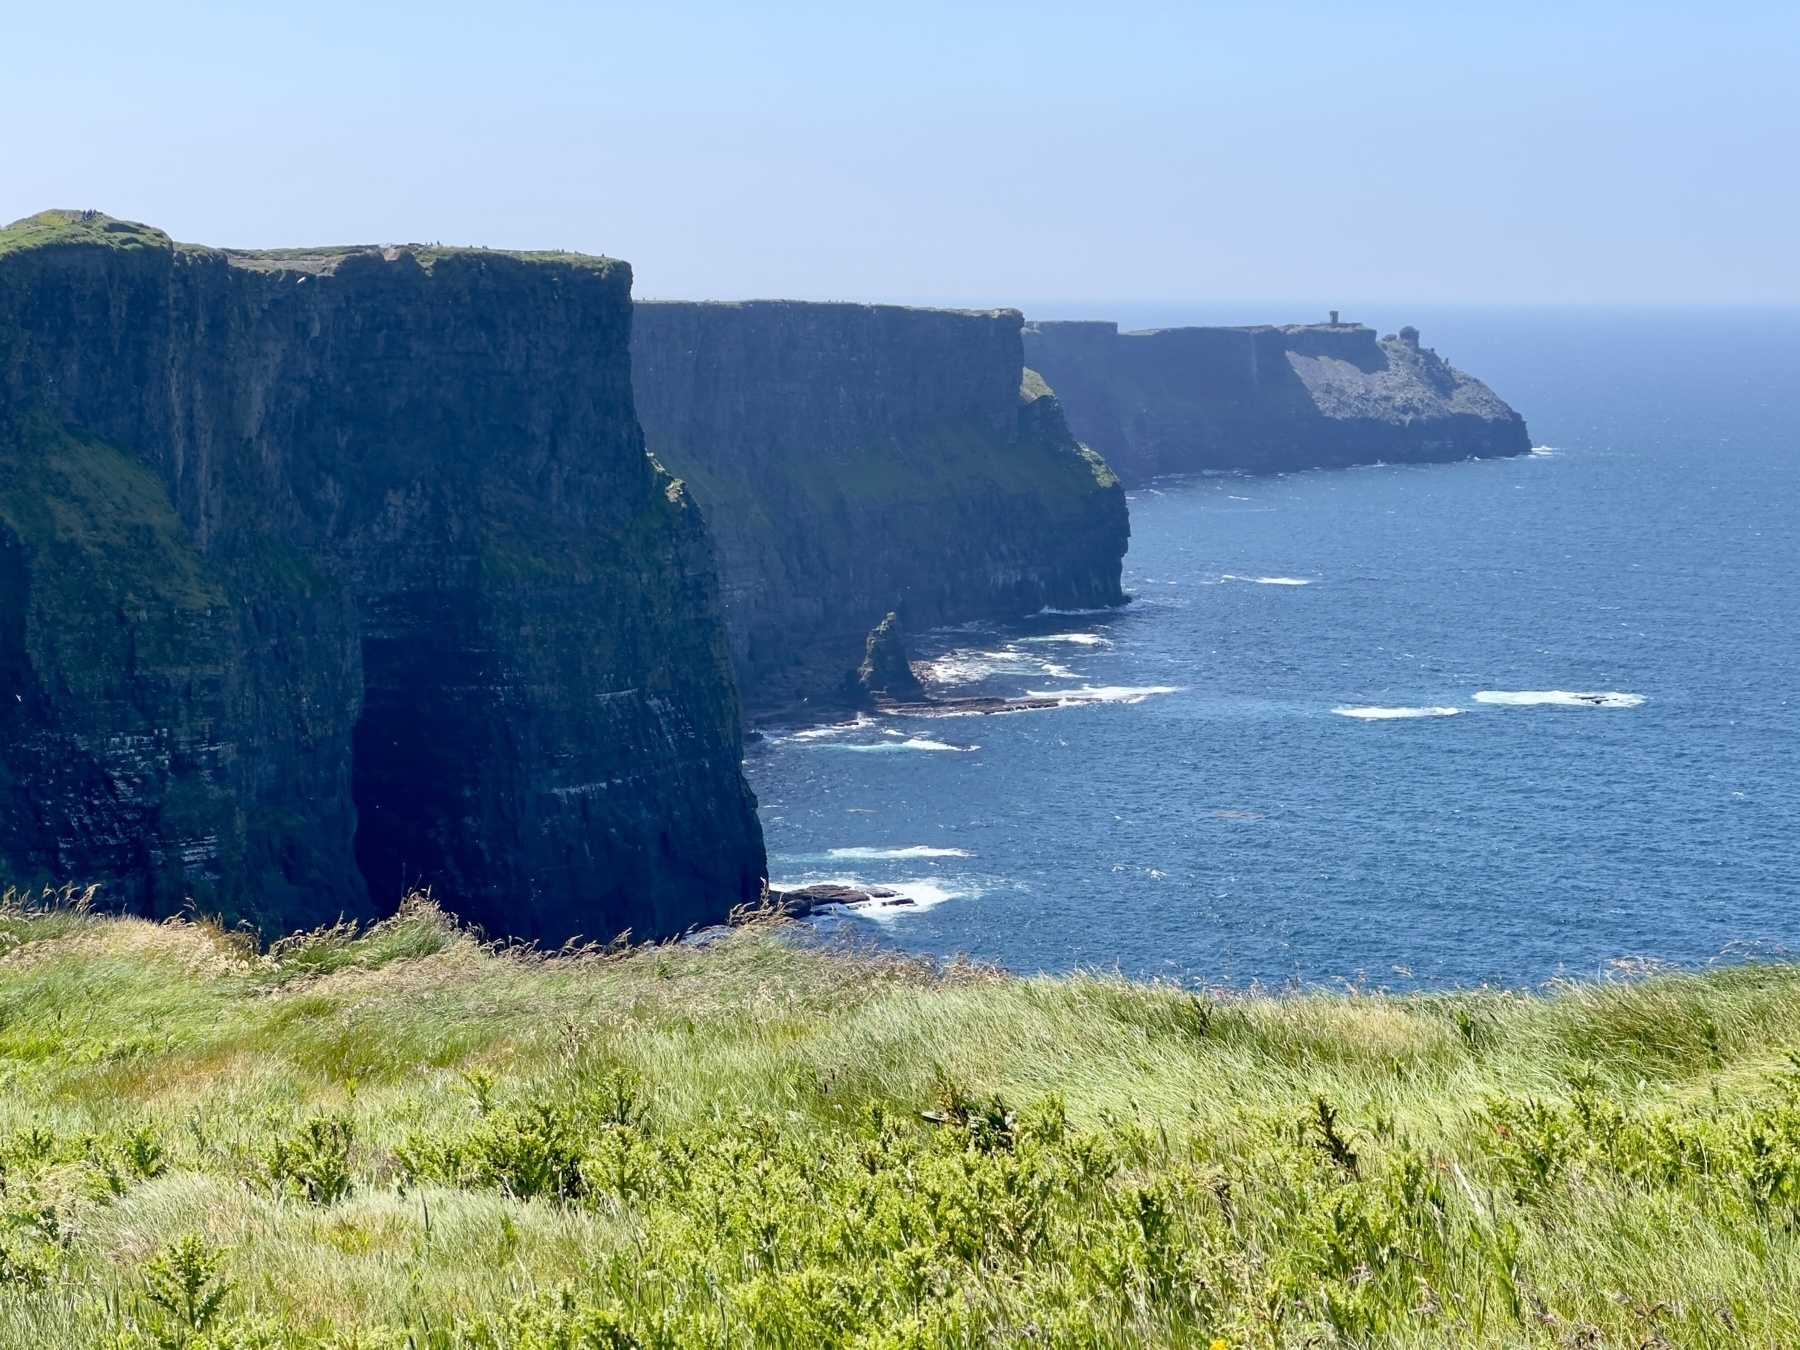 Auto-generated description: A stunning coastal landscape features dramatic cliffs, lush green grass, and a vast, calm ocean under a clear blue sky.